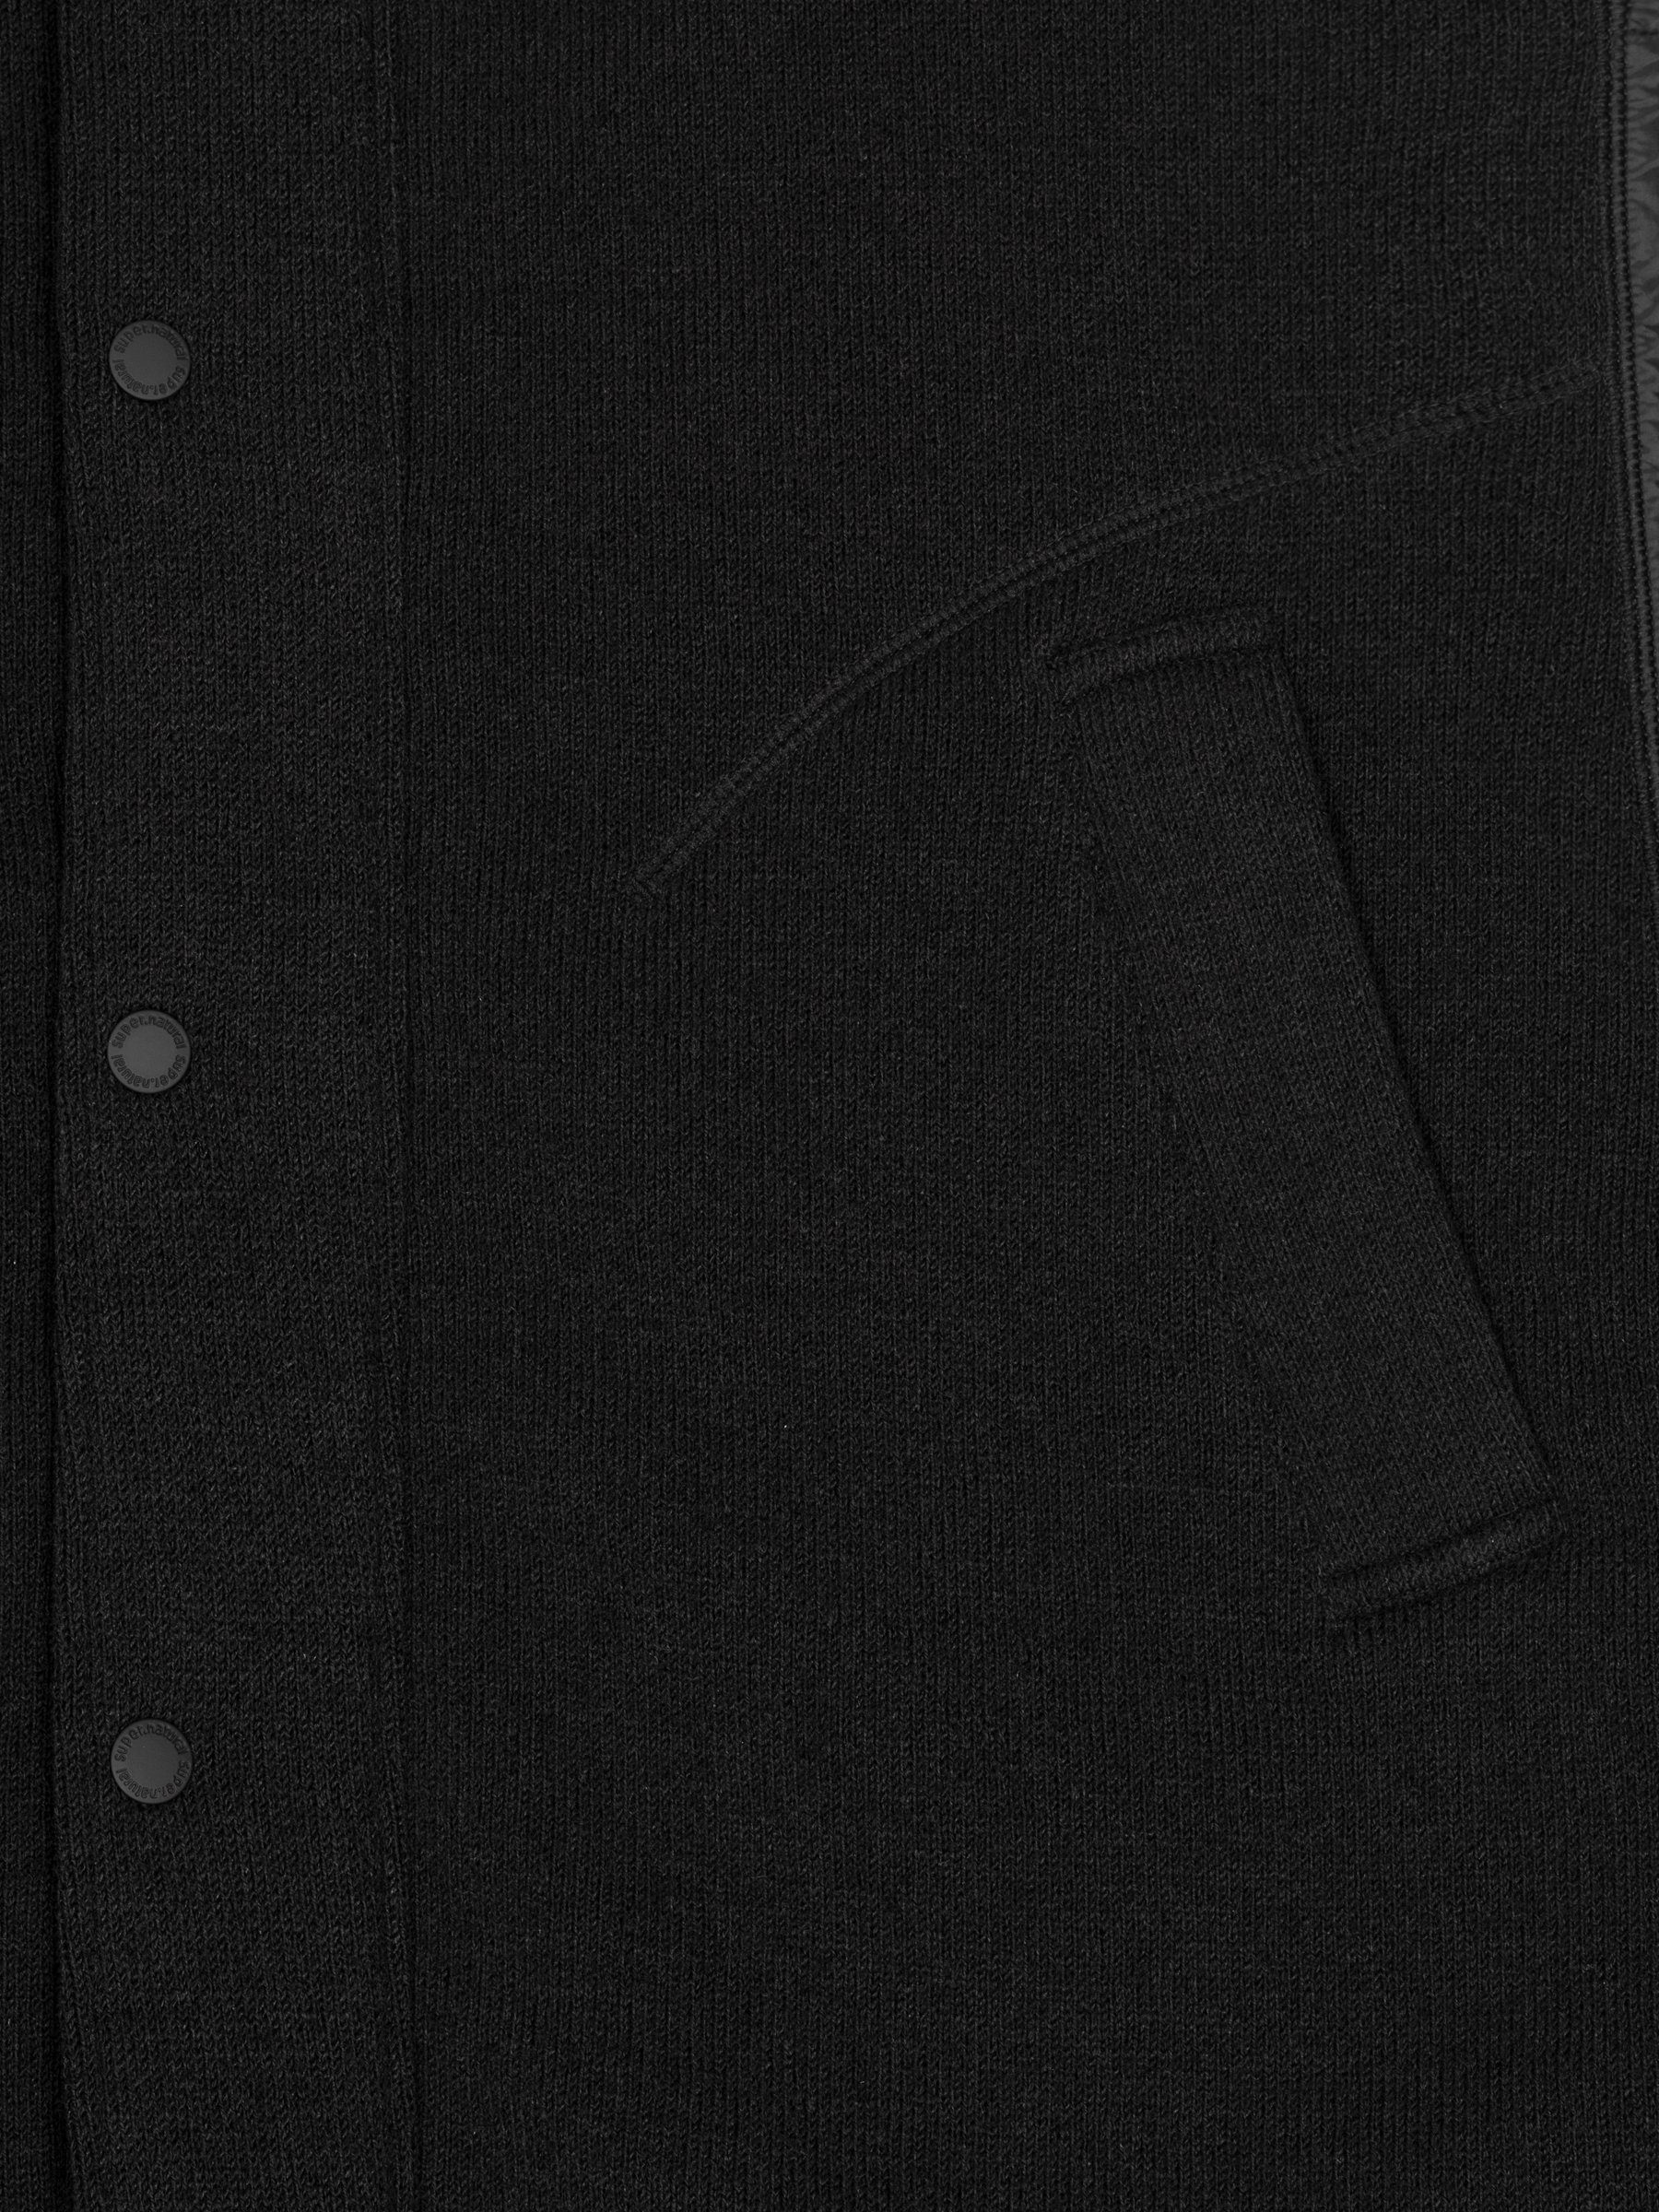 SUPER.NATURAL Outdoorjacke Funktionsjacke feinster unter Reißverschluss W JET BLACK COMBUSTION COAT Merino-Materialmix versteckt, Knopfleiste